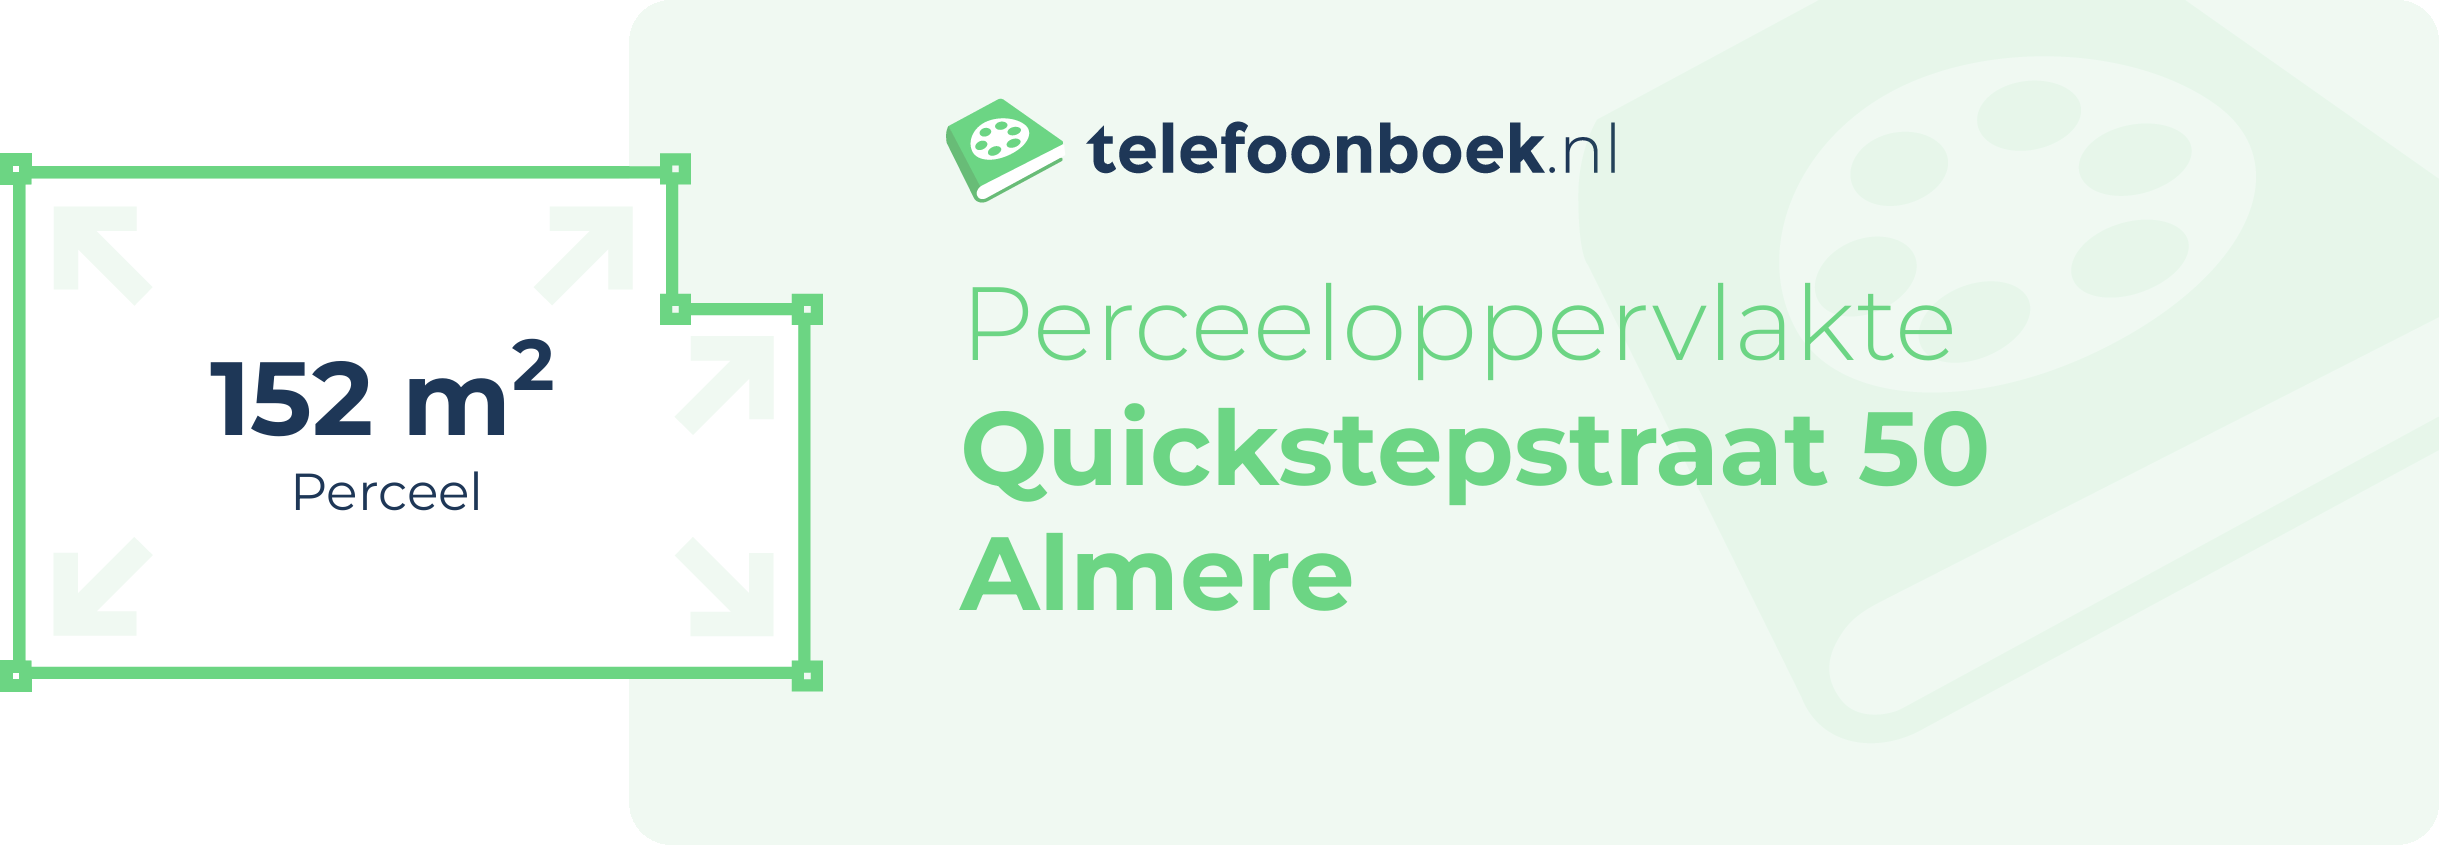 Perceeloppervlakte Quickstepstraat 50 Almere